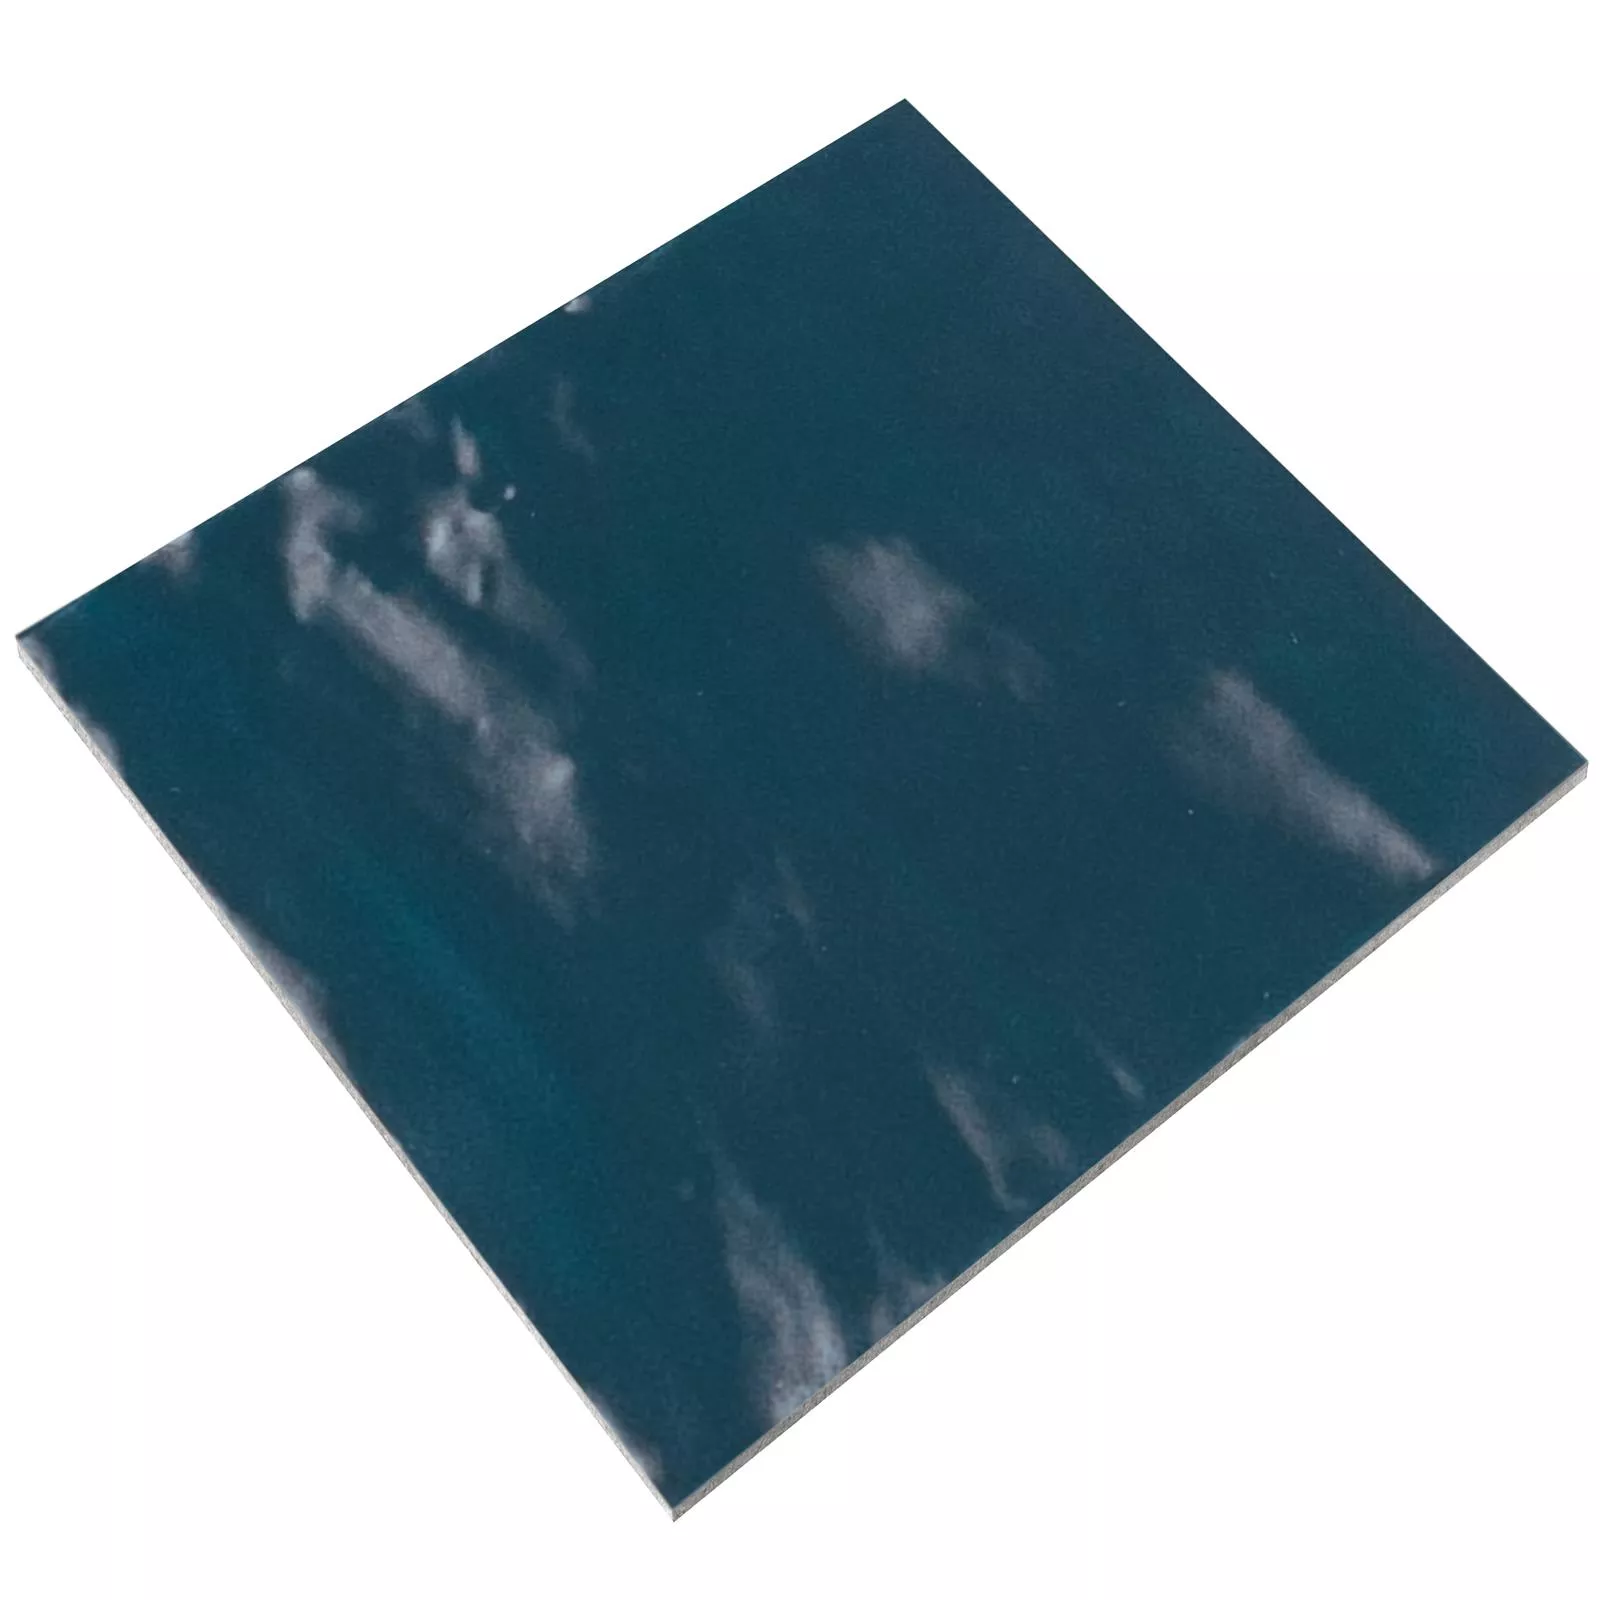 Wandtegels Marbella Gegolfd 15x15cm Blauw